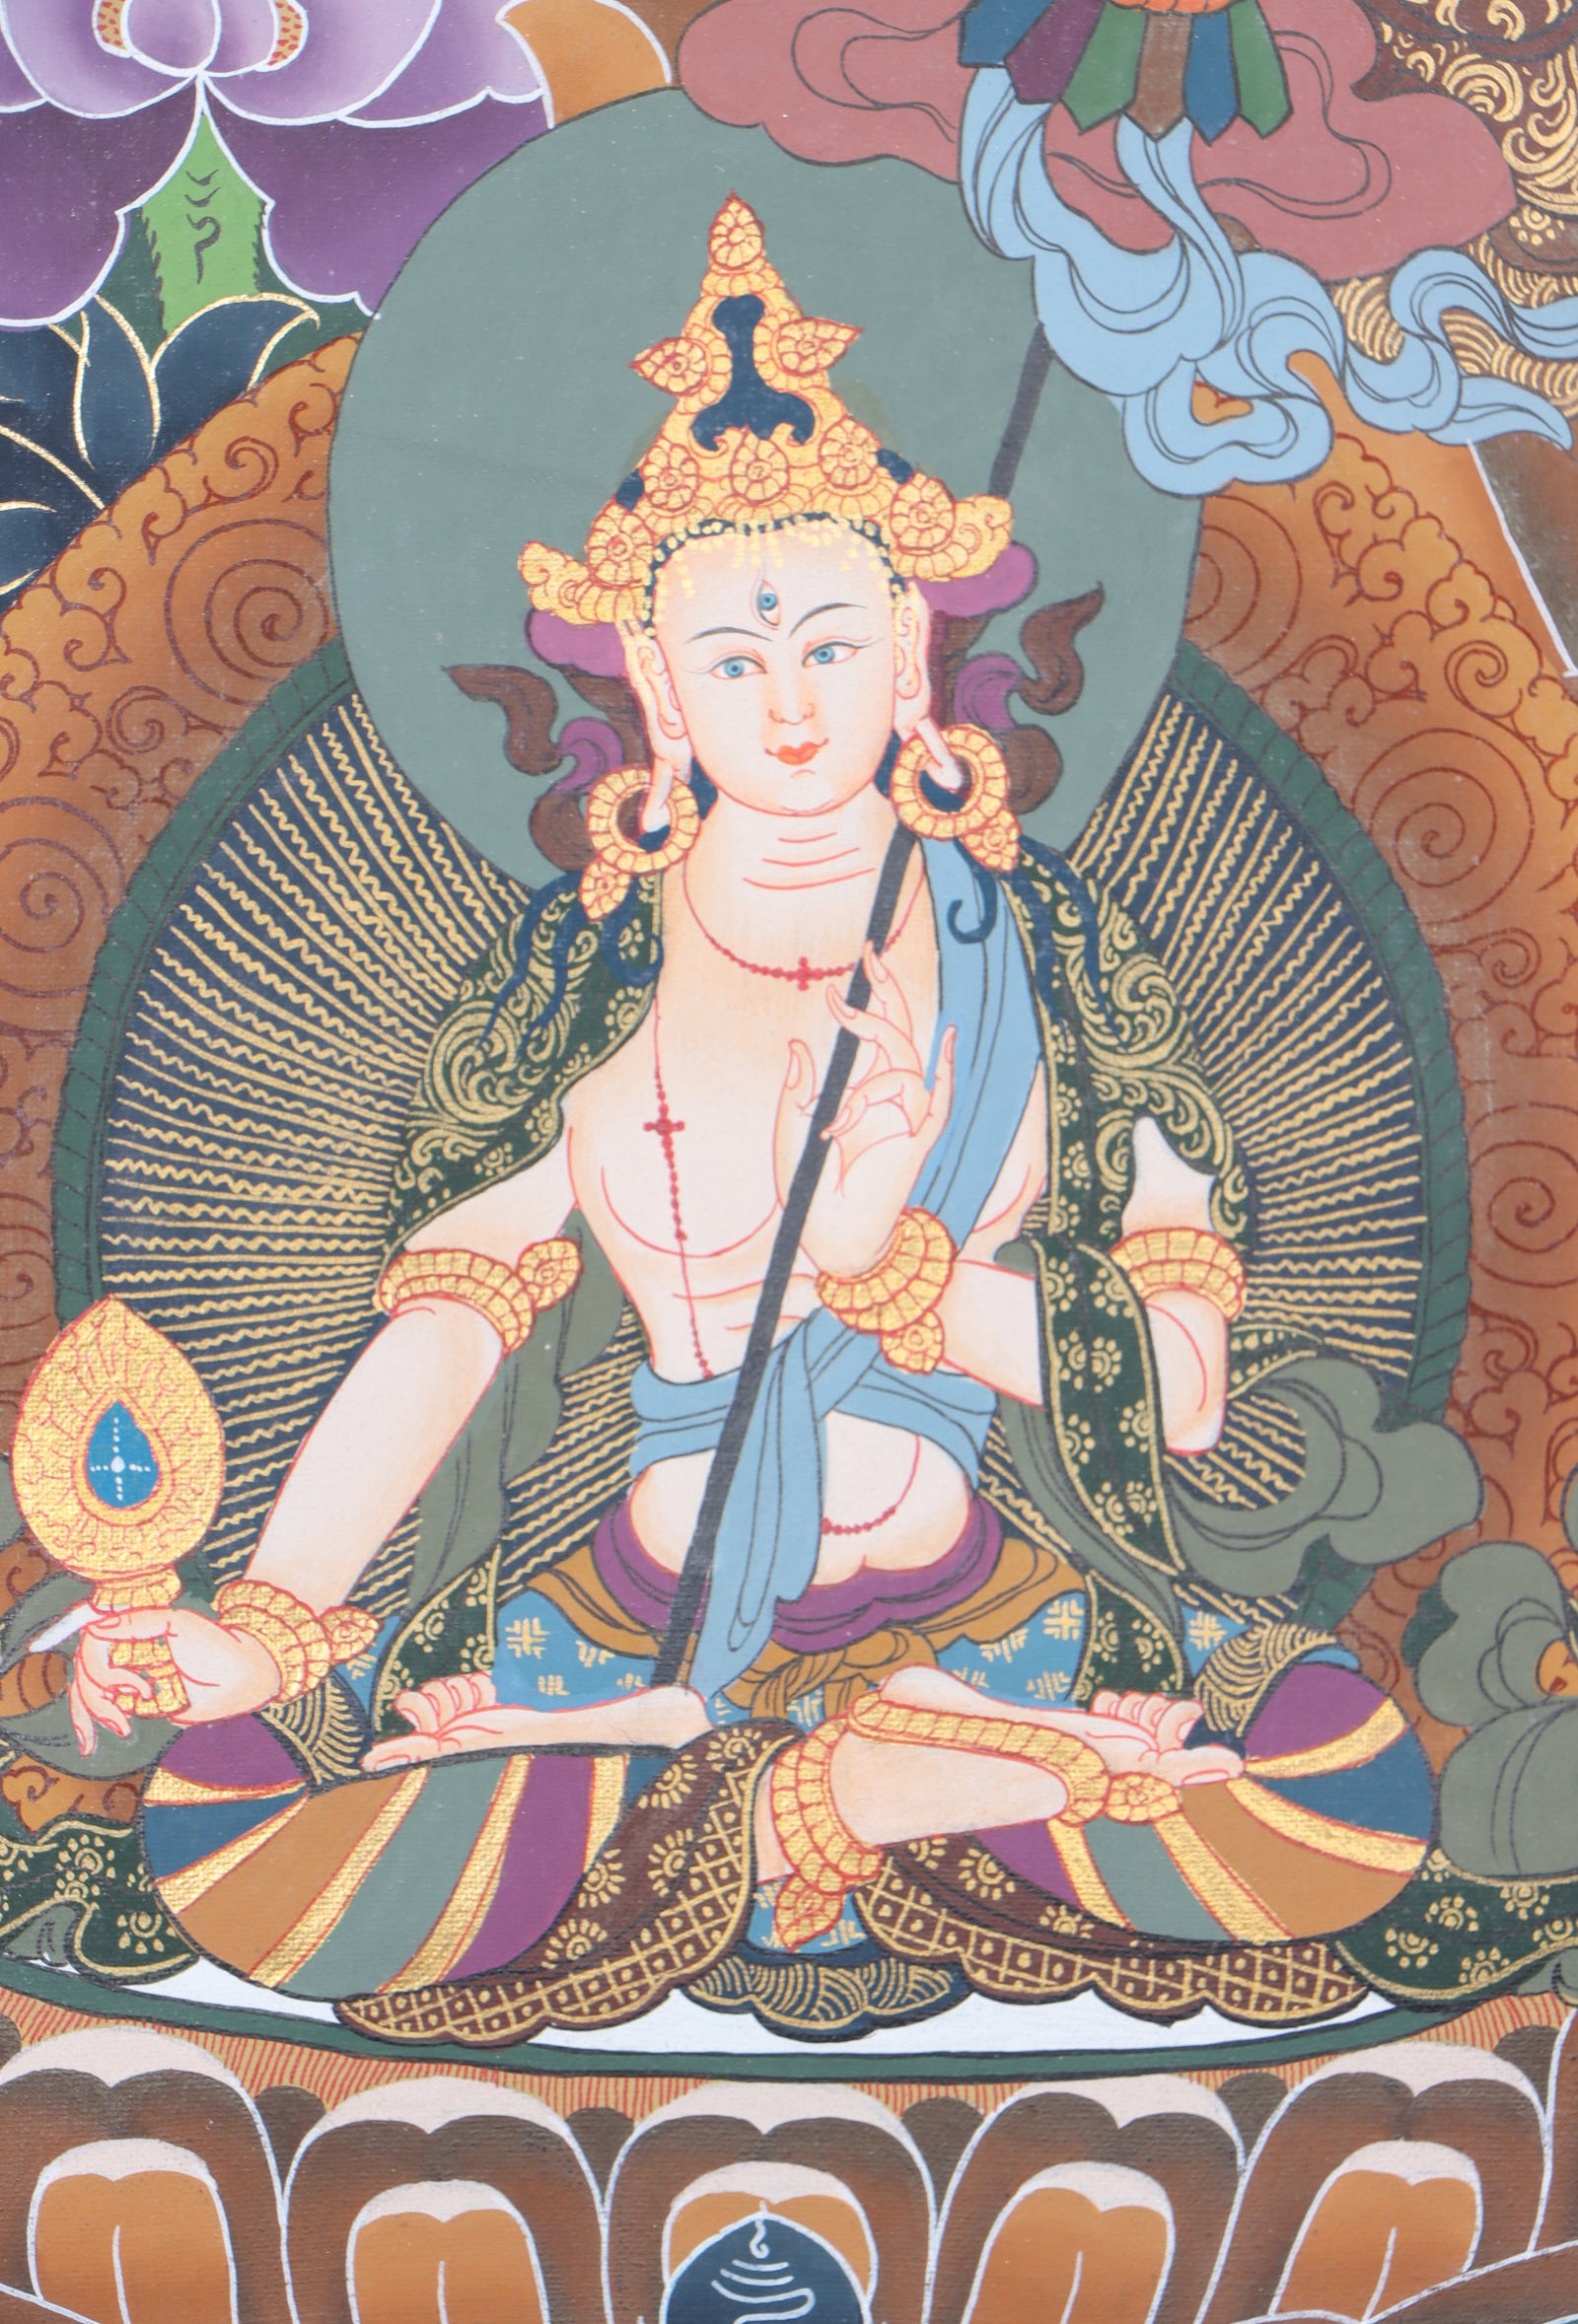  Green Tara Thangka for wisdom and enlightment